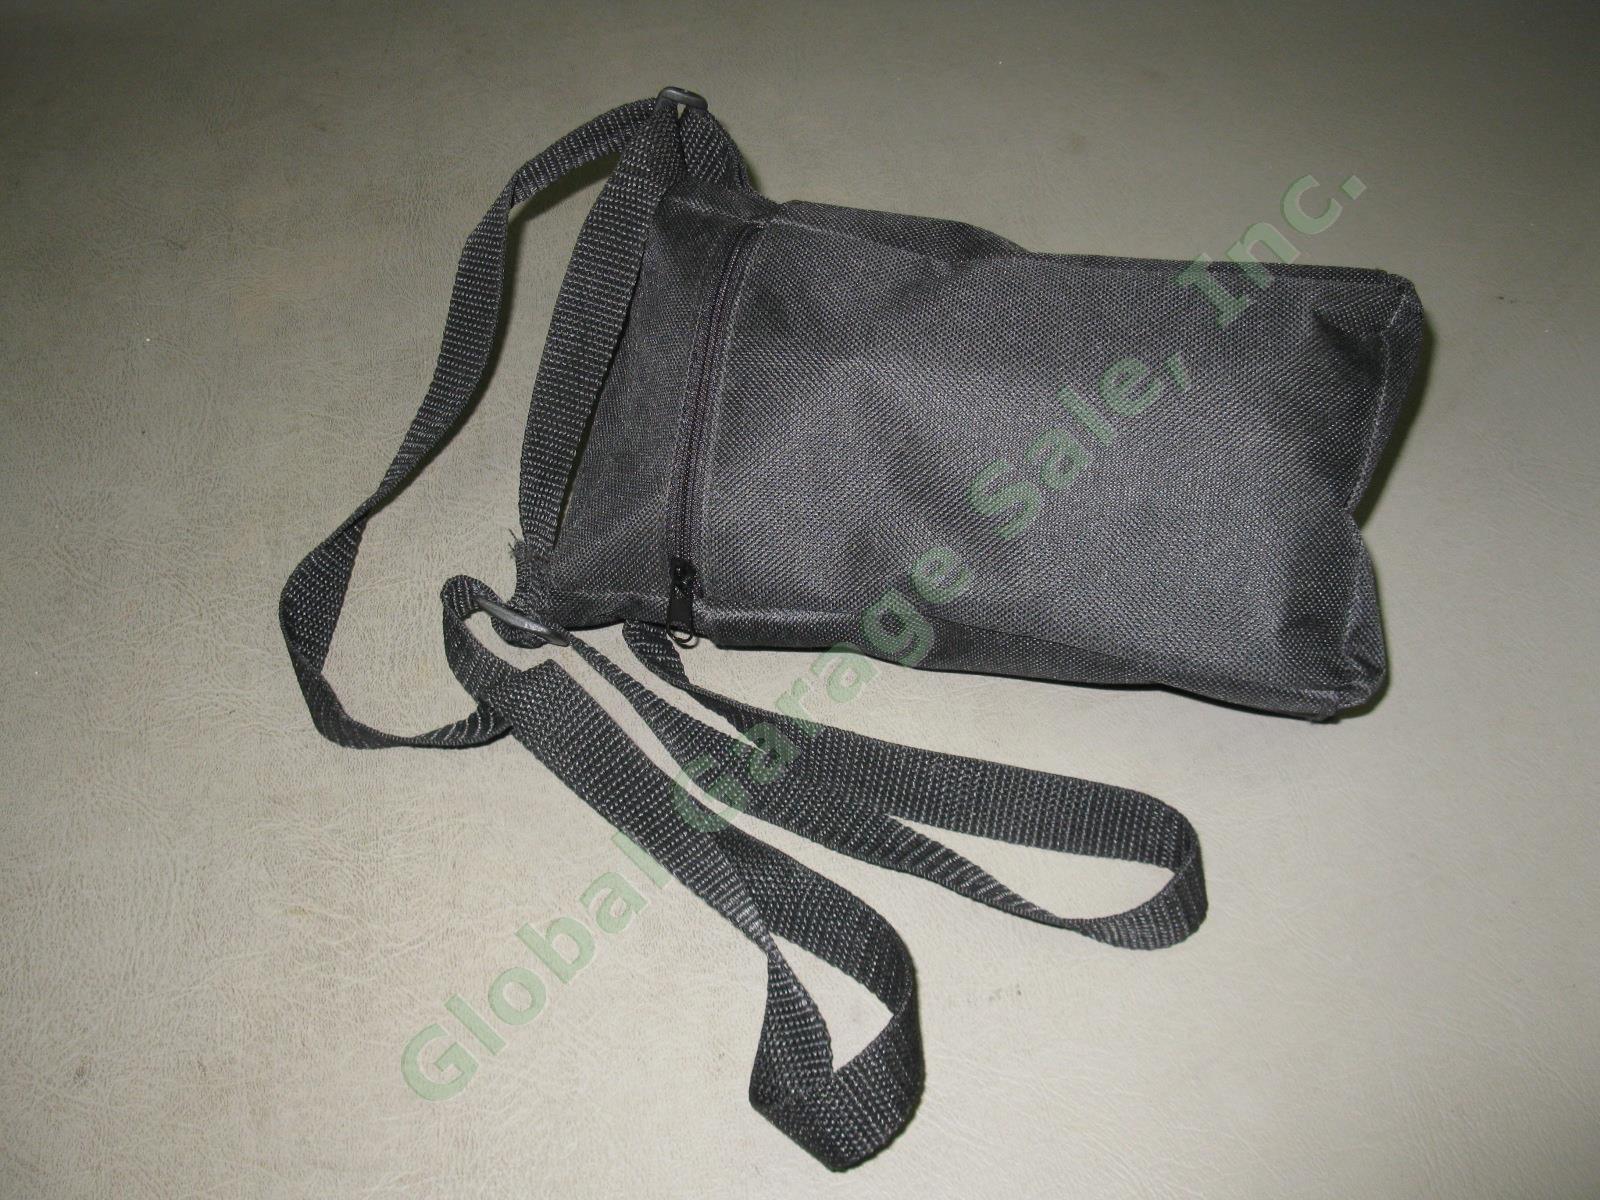 Pentax 500mm Angled Spotting Scope Telephoto Lens W/ Hood Cap Pouch Bag Bundle + 9